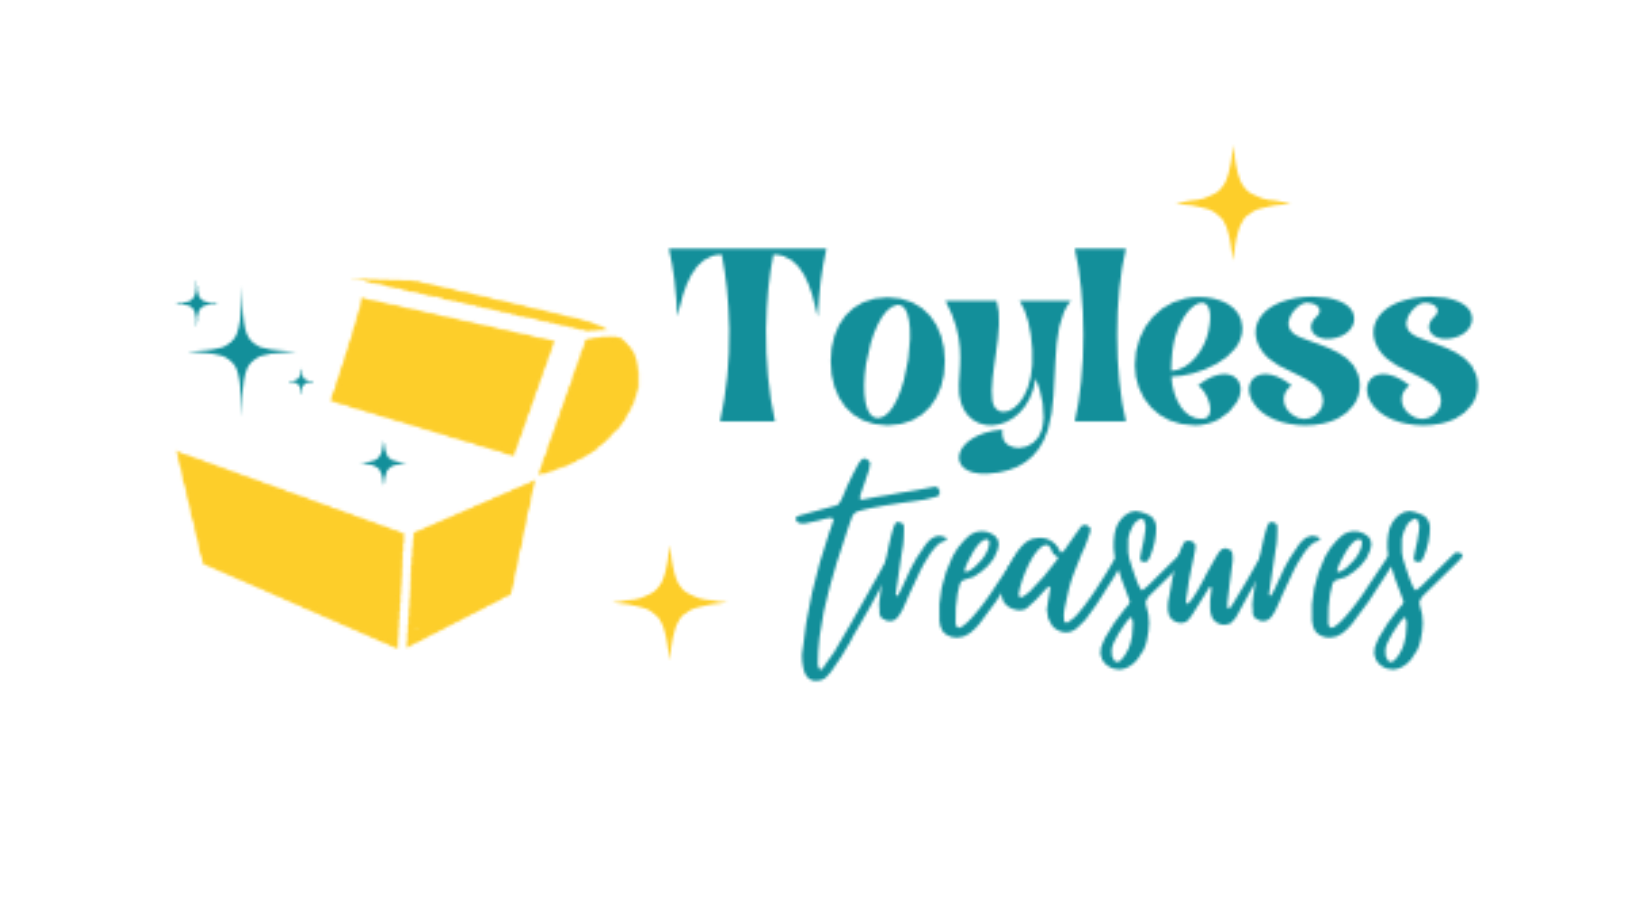 toyless treasures logo 1